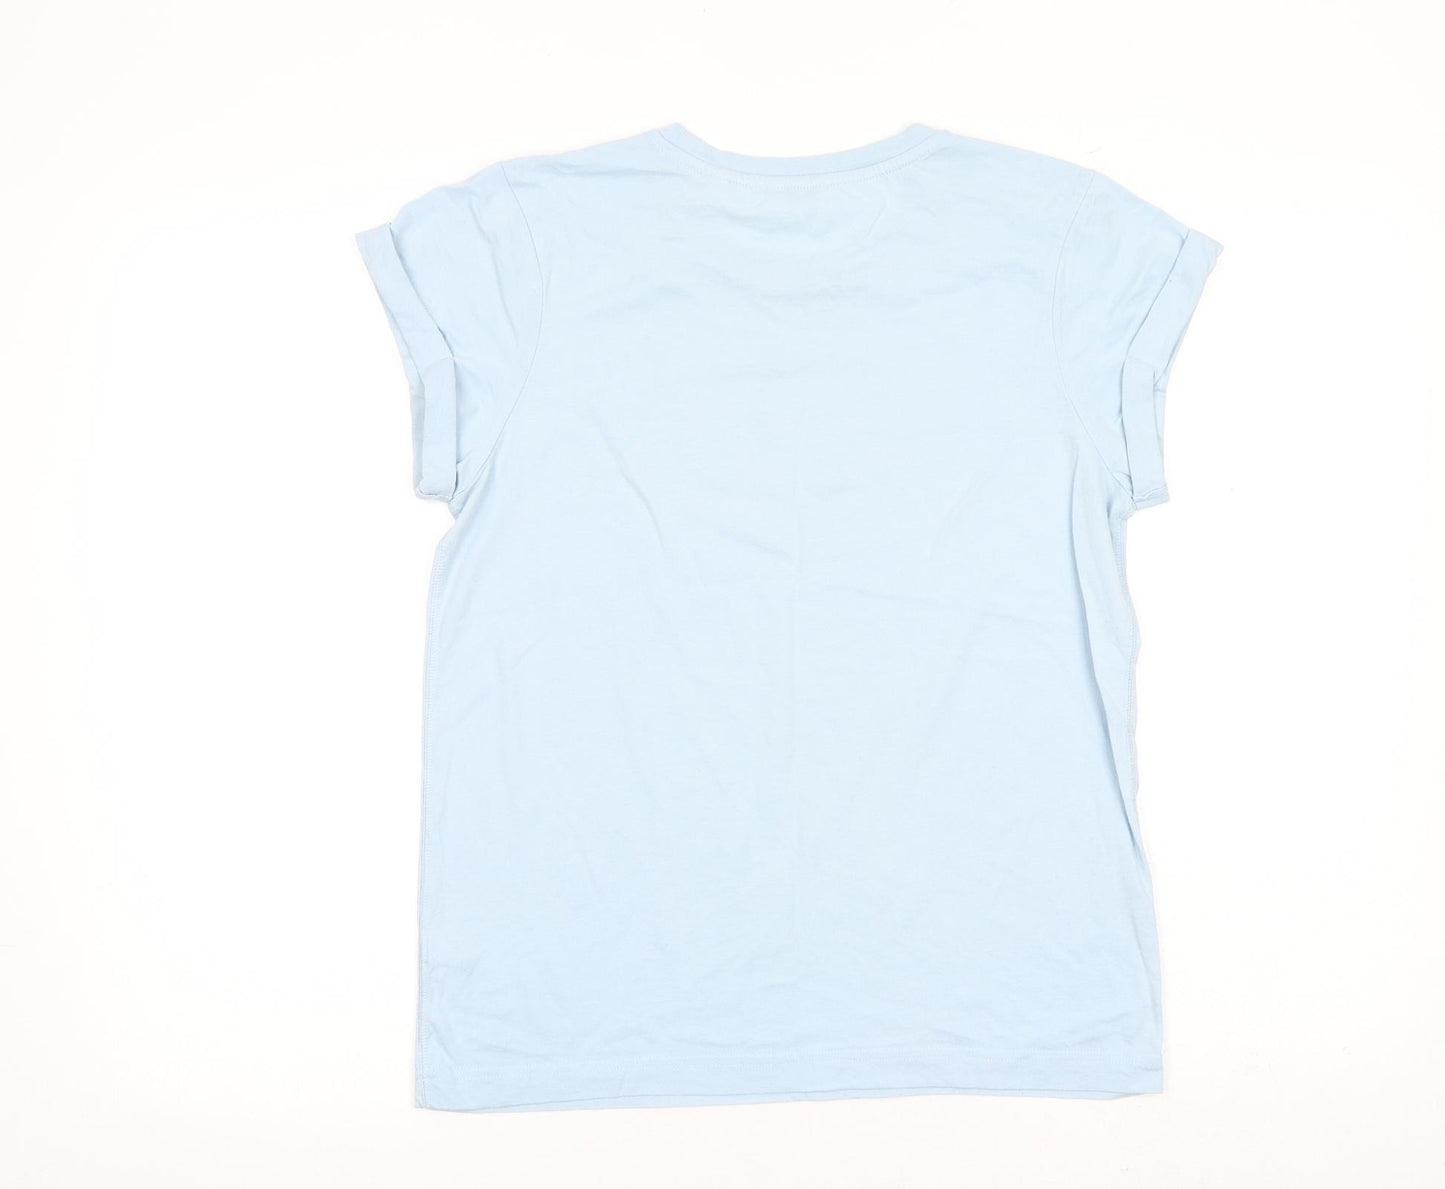 Jack Wills Womens Blue 100% Cotton Basic T-Shirt Size 6 Round Neck